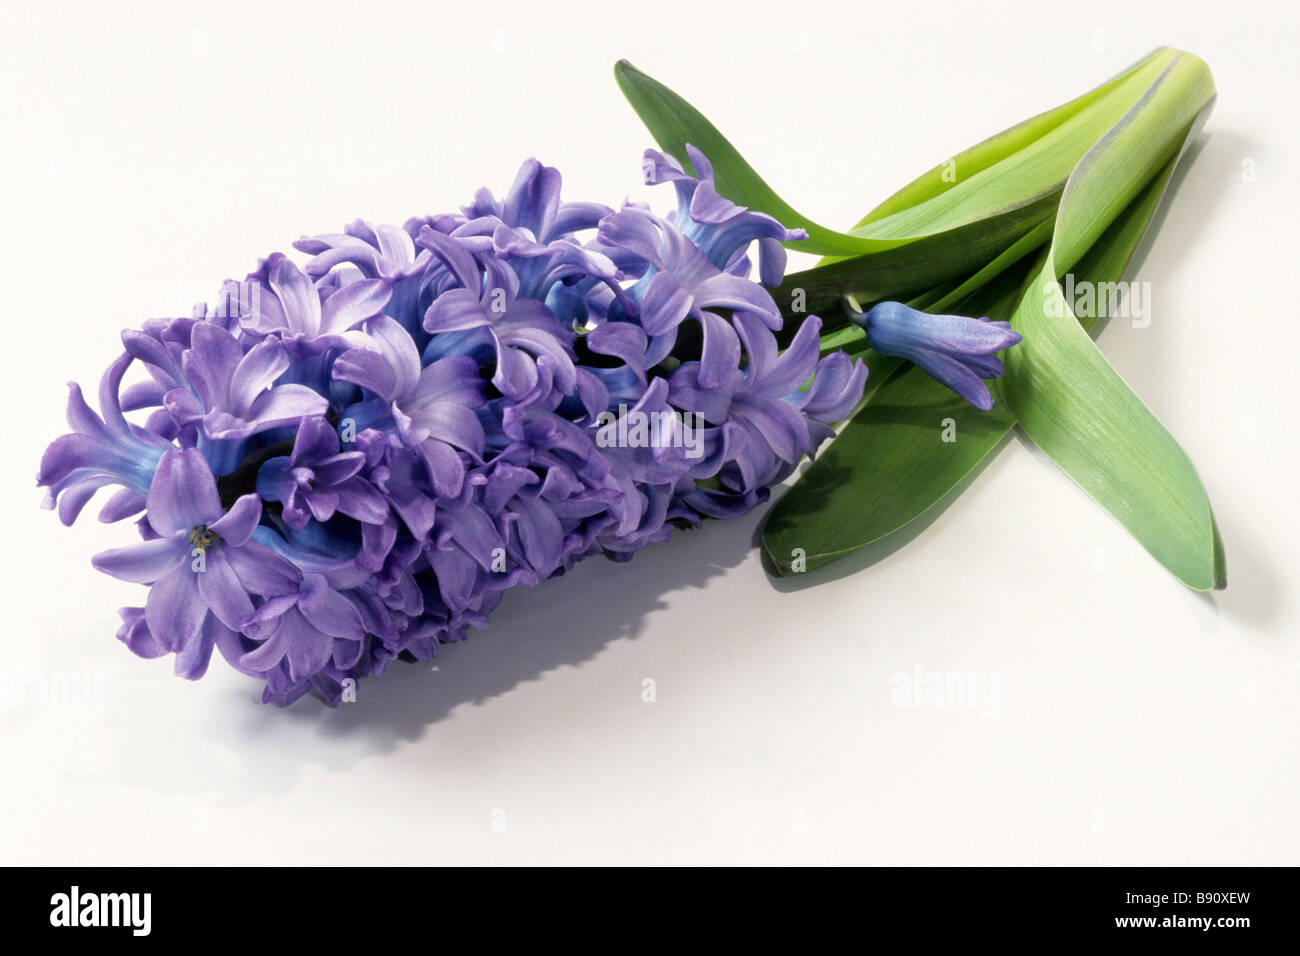 Common Hyacinth (Hyacinthus orientalis), variety: Tapien Blue, flowering plant, studio picture Stock Photo